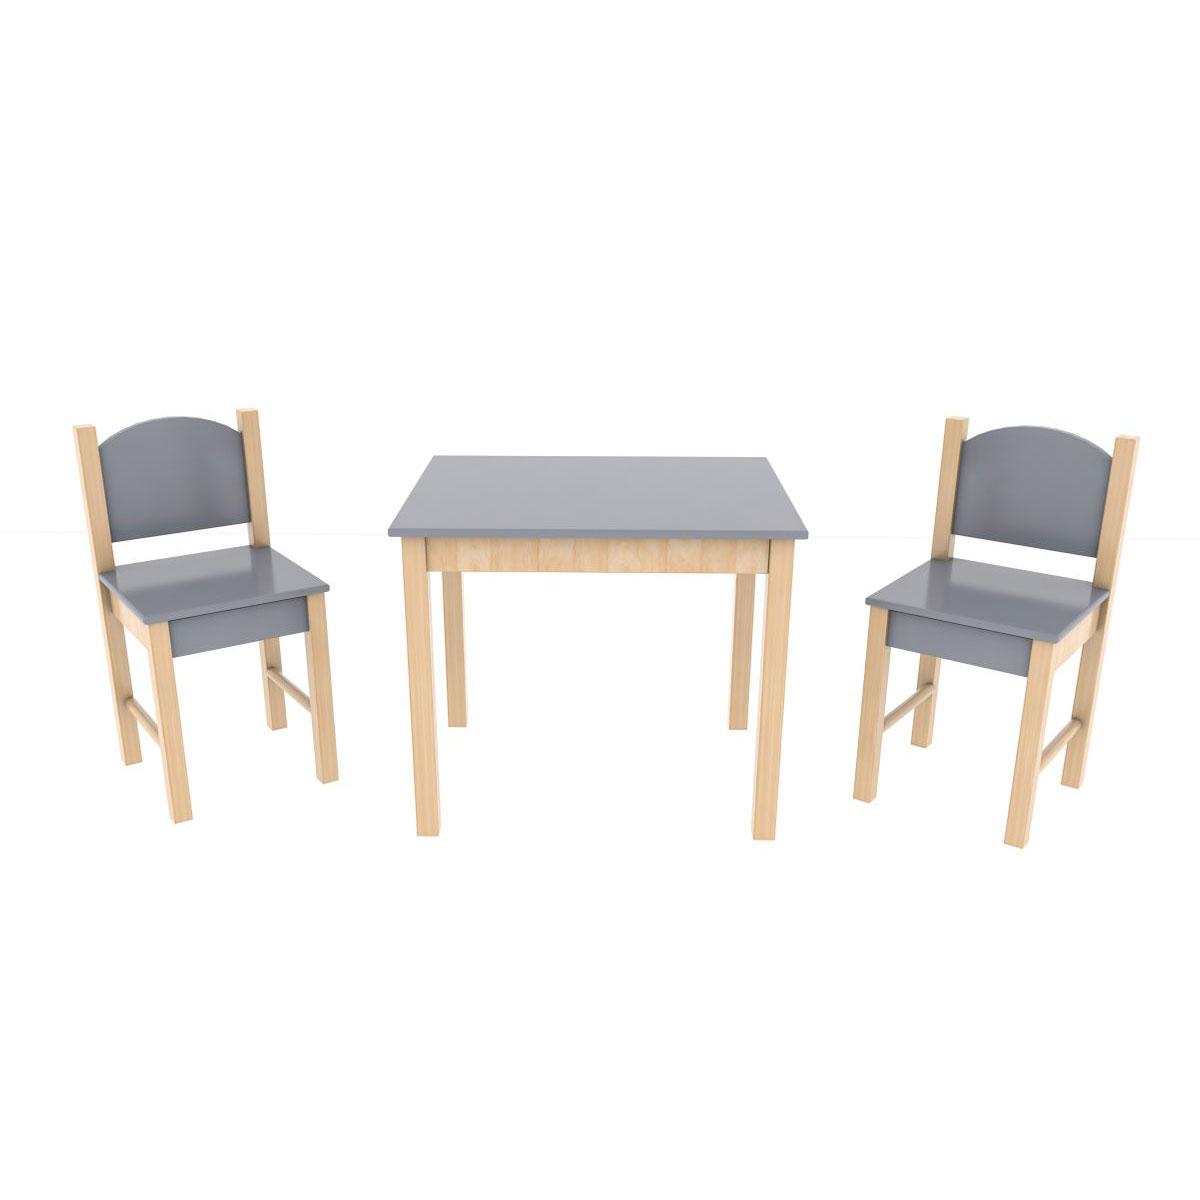 Coemo 3tlg. Stühle Kindersitzgruppe Grau Tisch K003207152 | | Stefano grau 1 2